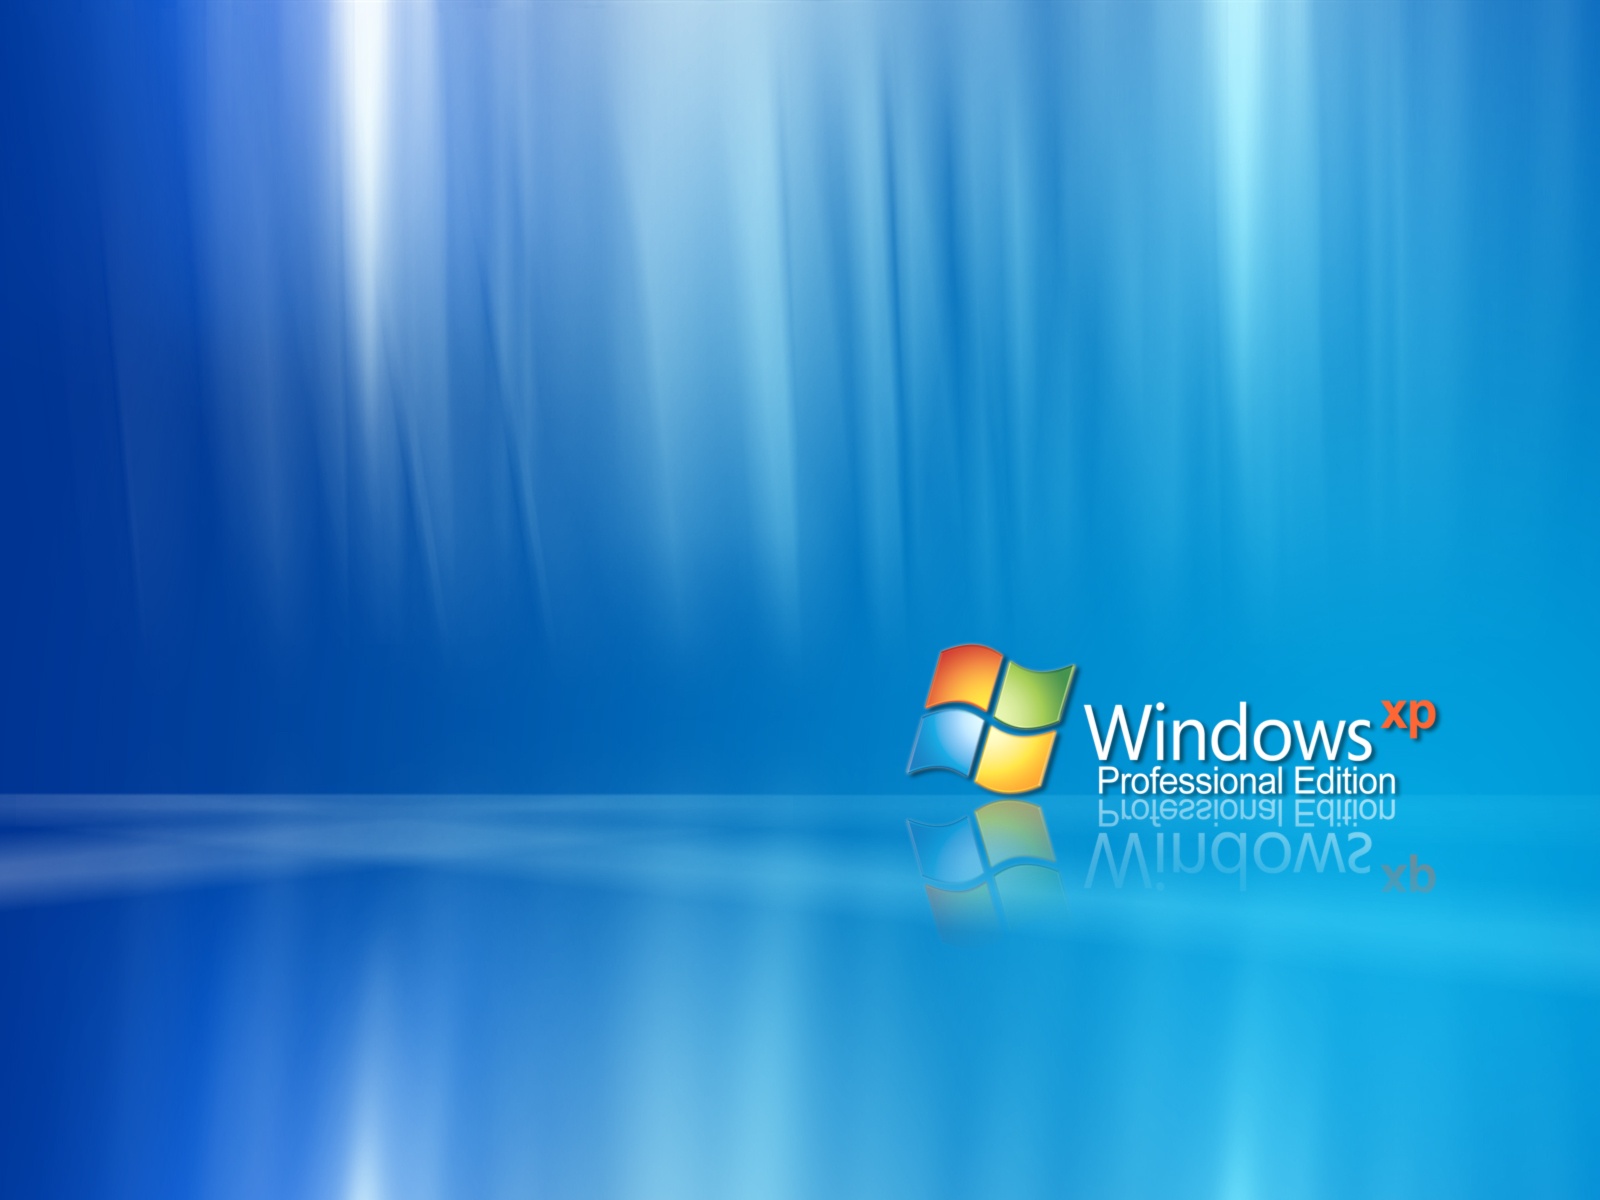 Windows xp desktop wallpaper